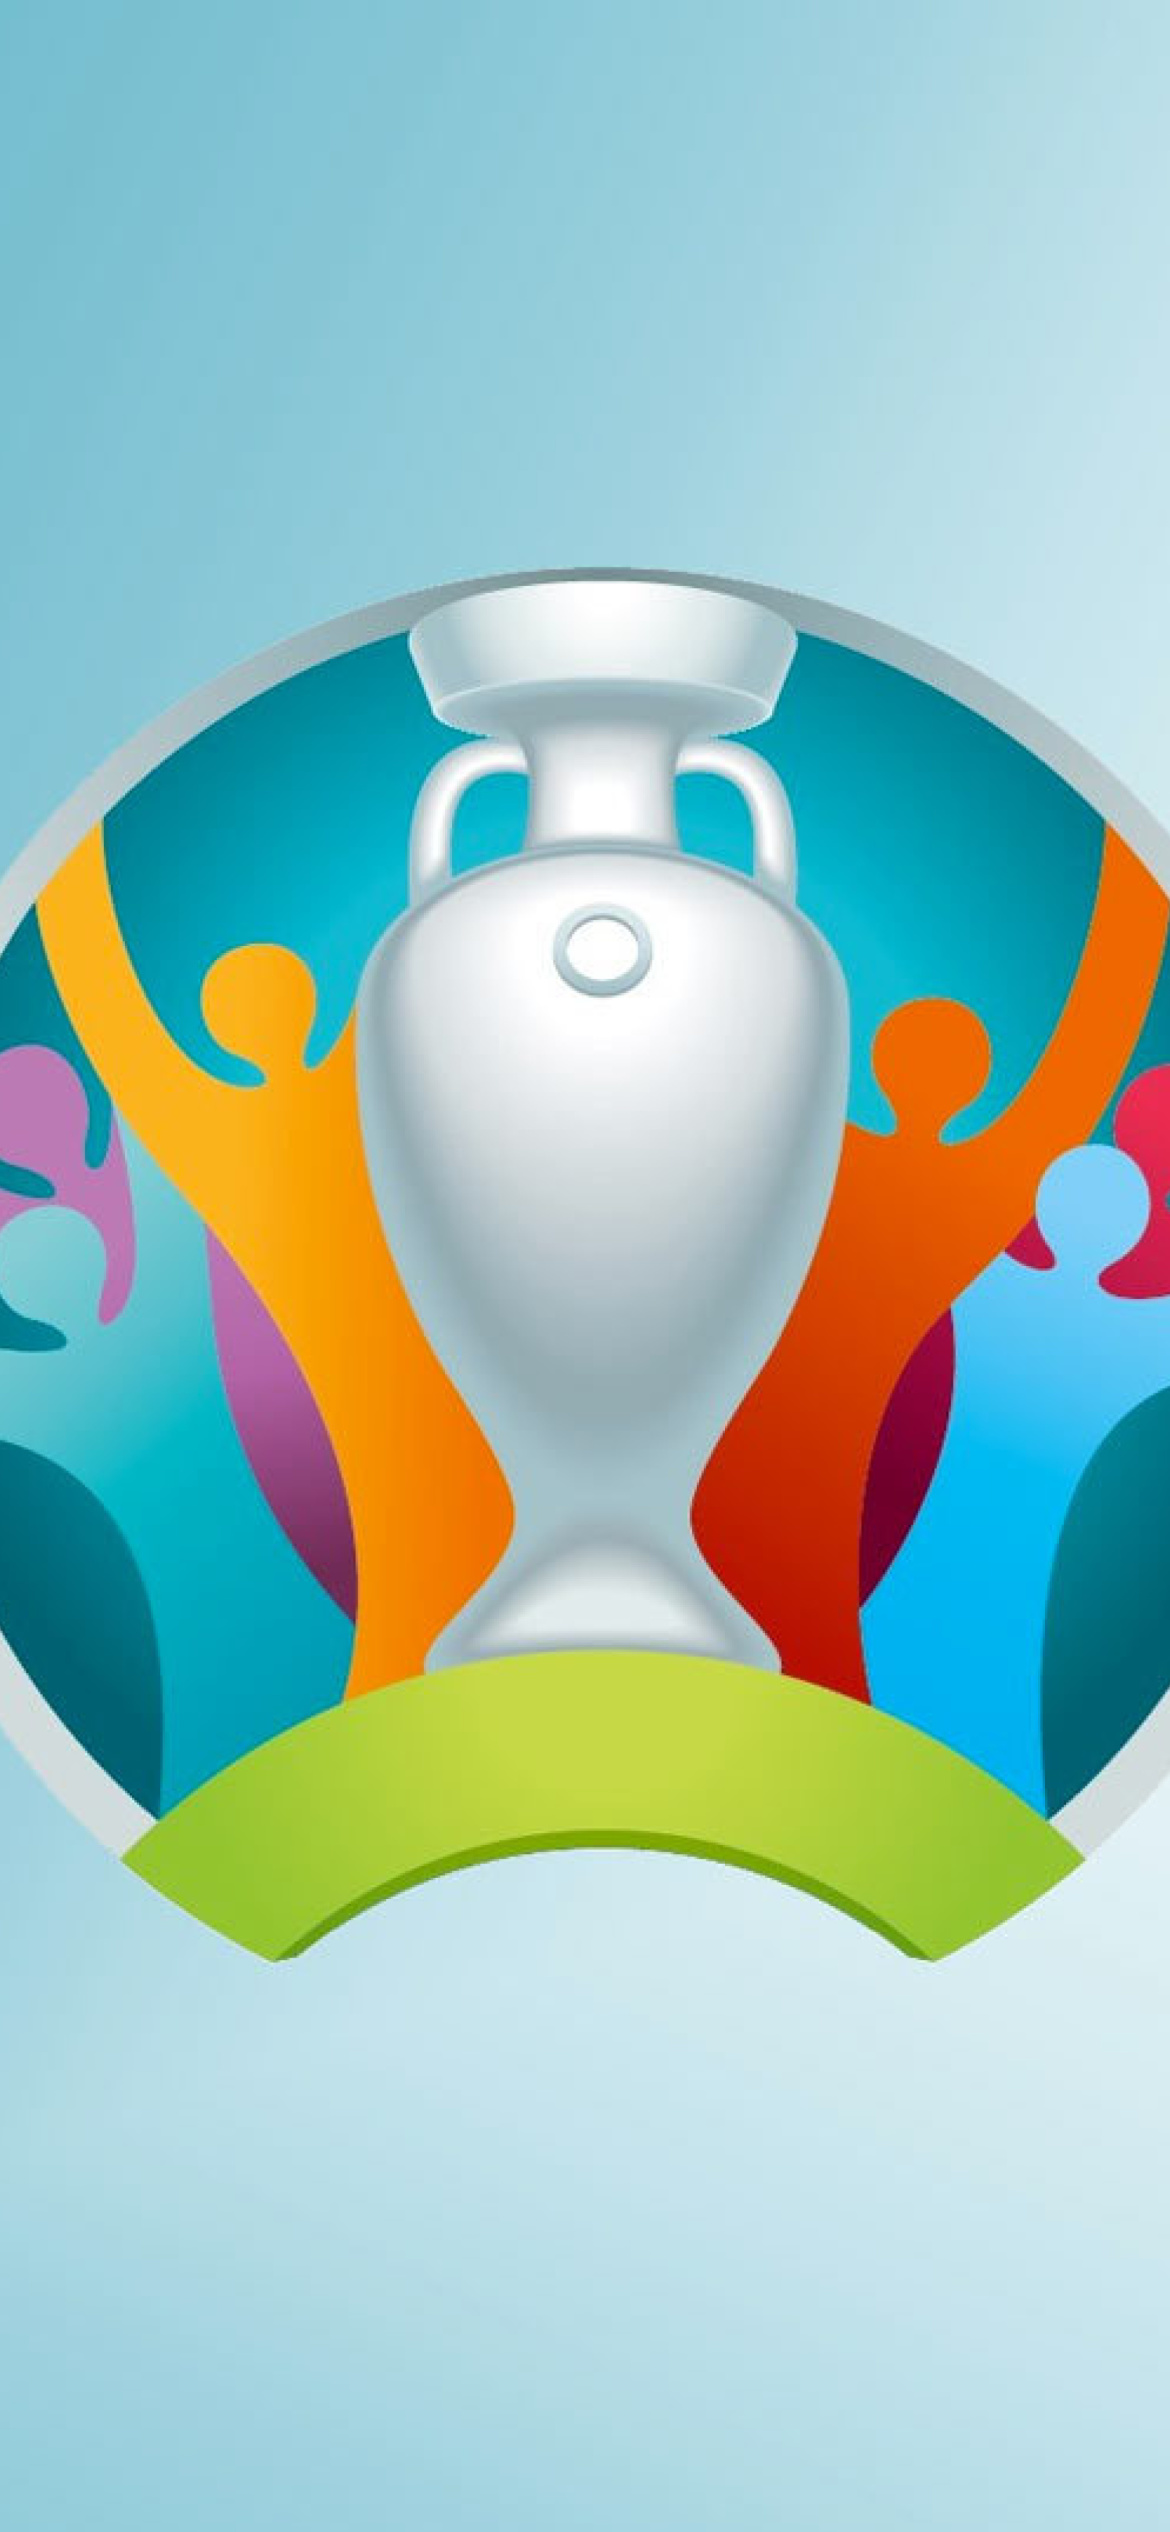 UEFA Euro 2020 wallpaper 1170x2532